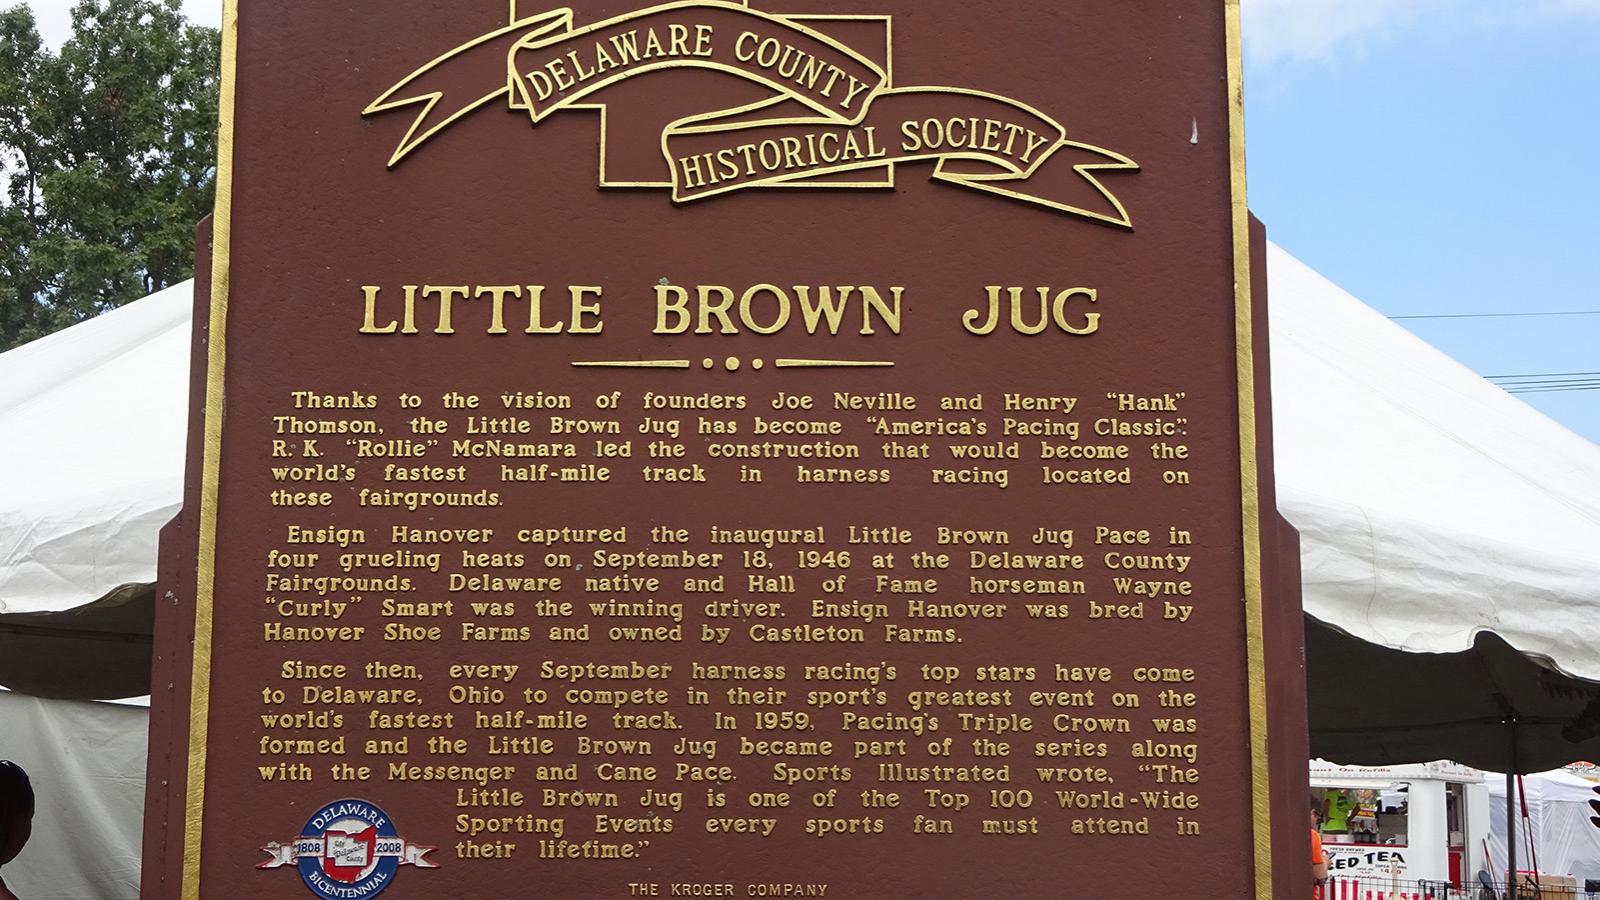 Historical marker for the Little Brown Jug